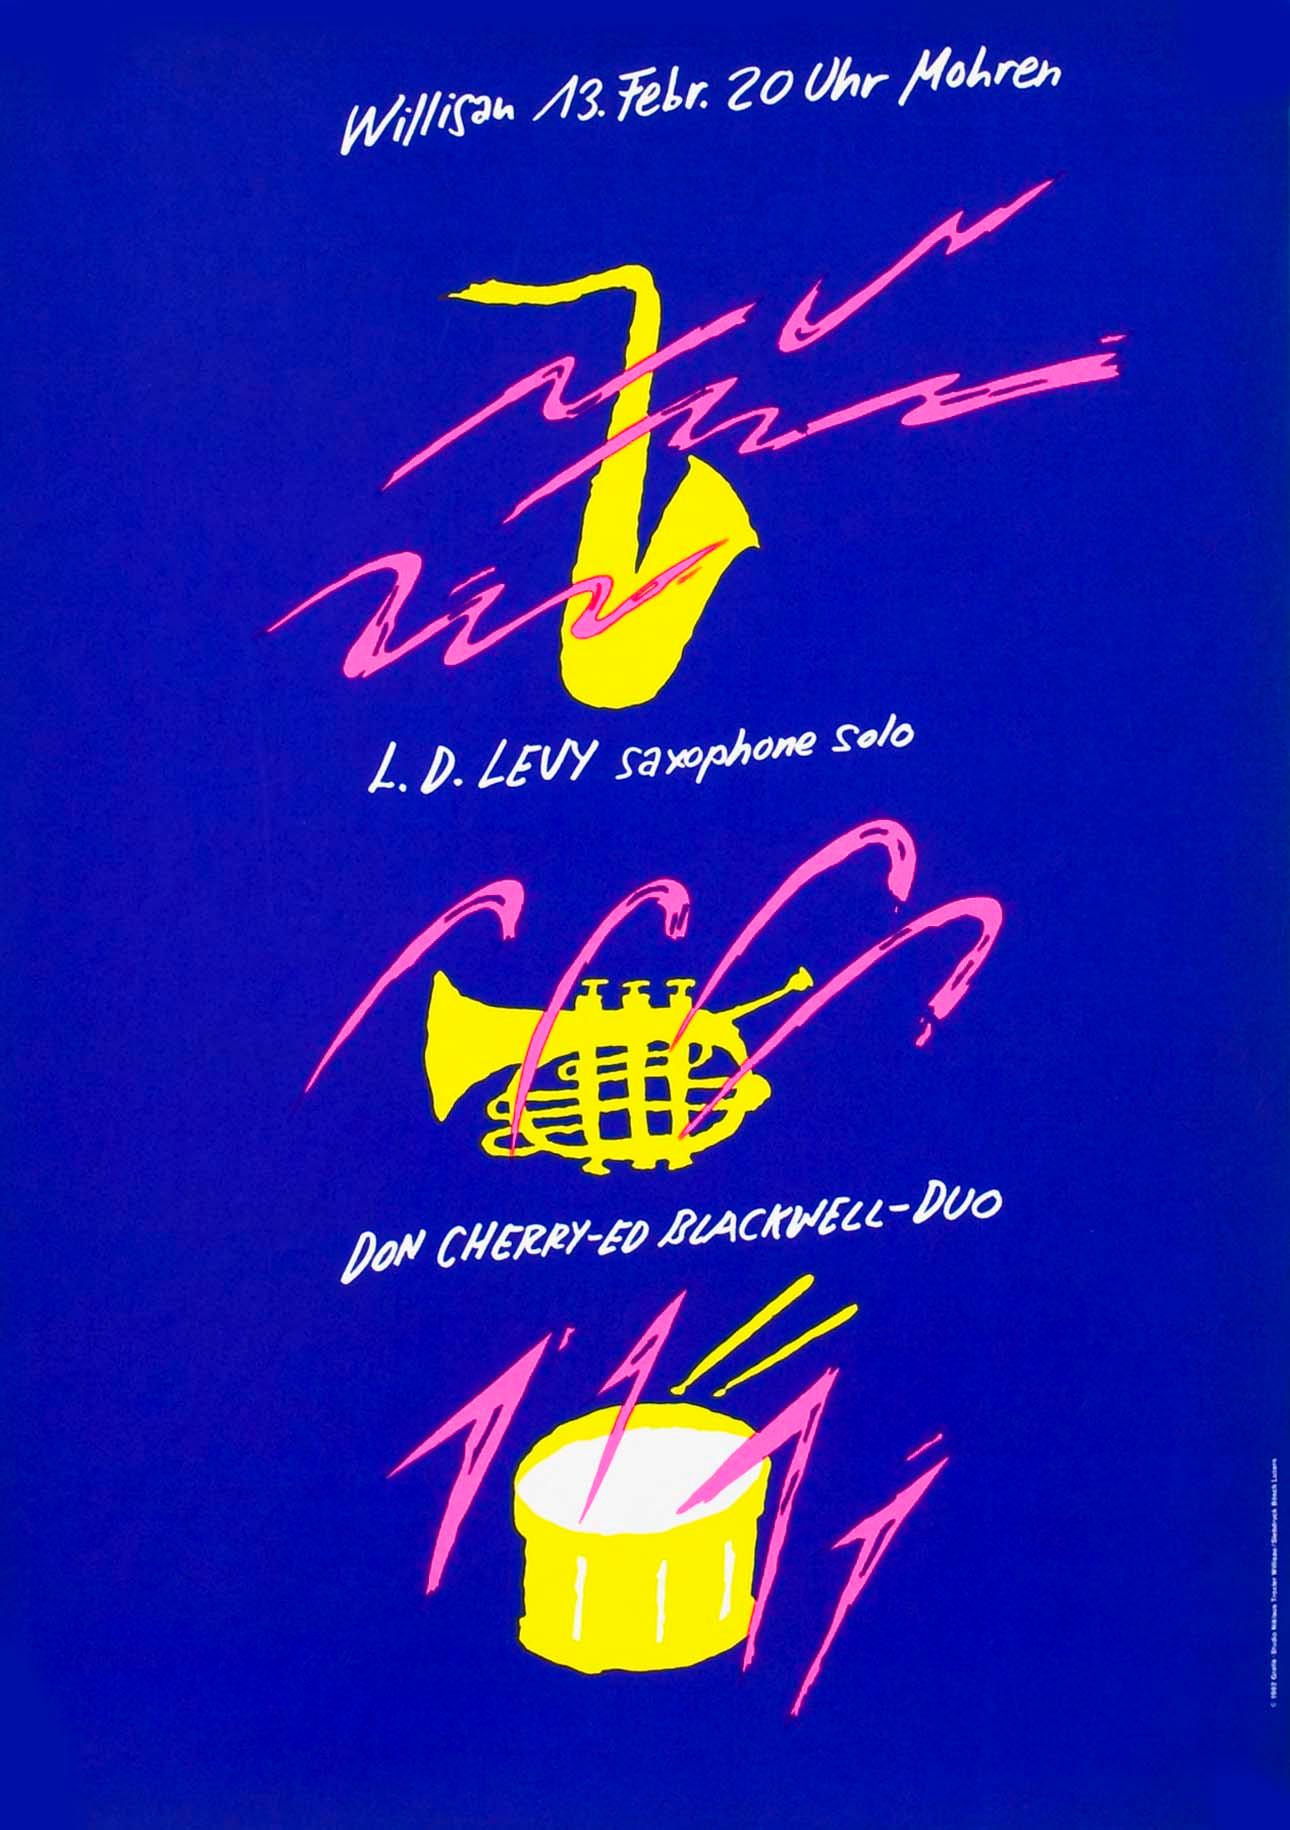 "L.D. Levy, Don Cherry - Ed Blackwell Duo" Troxler Jazz Festival Willisau Poster - Print by Niklaus Troxler